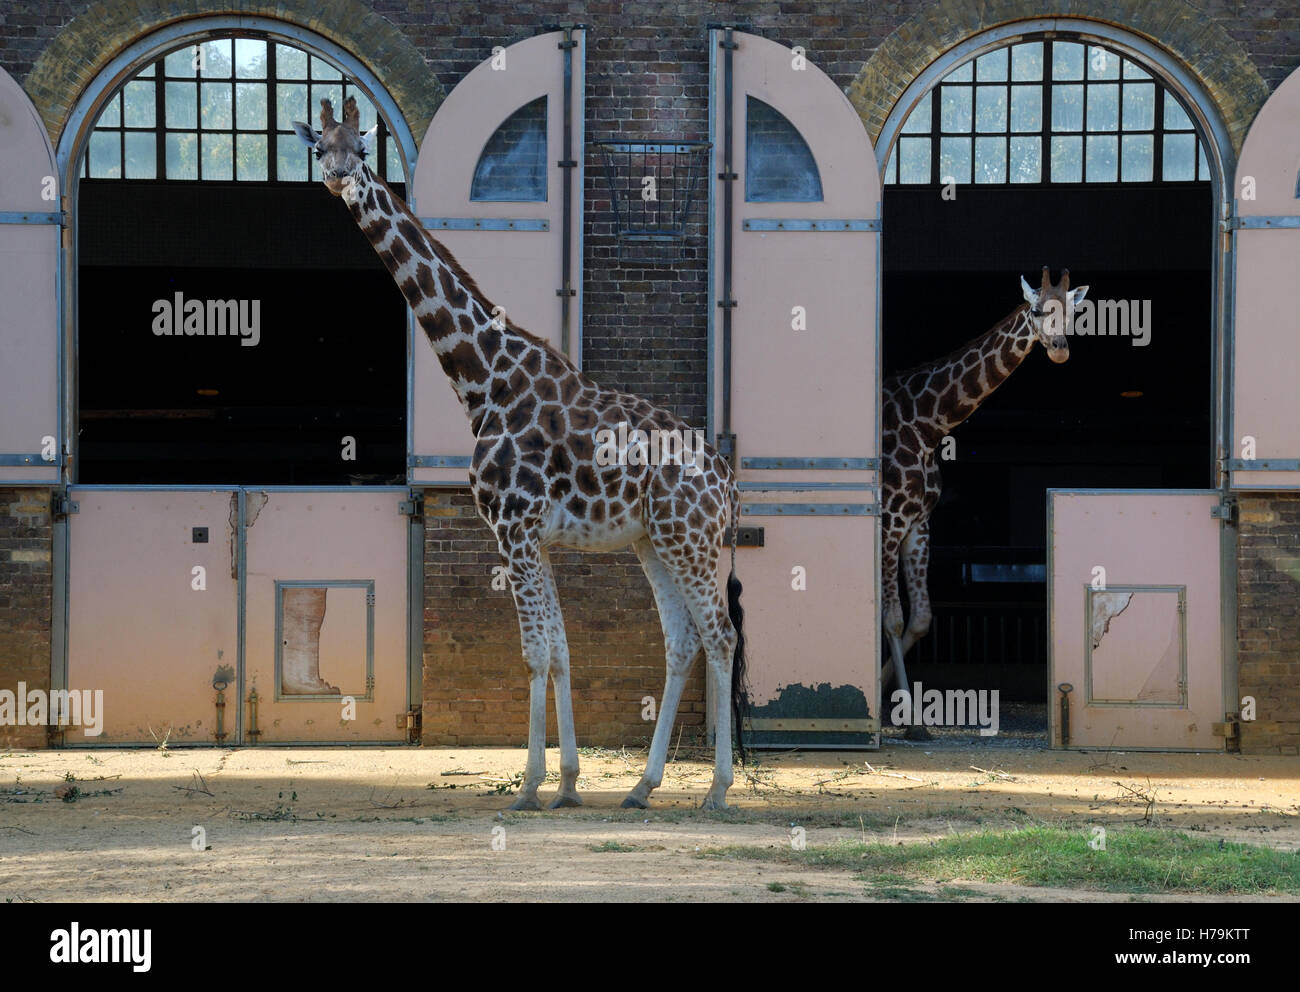 Giraffes at London Zoo, UK. Stock Photo